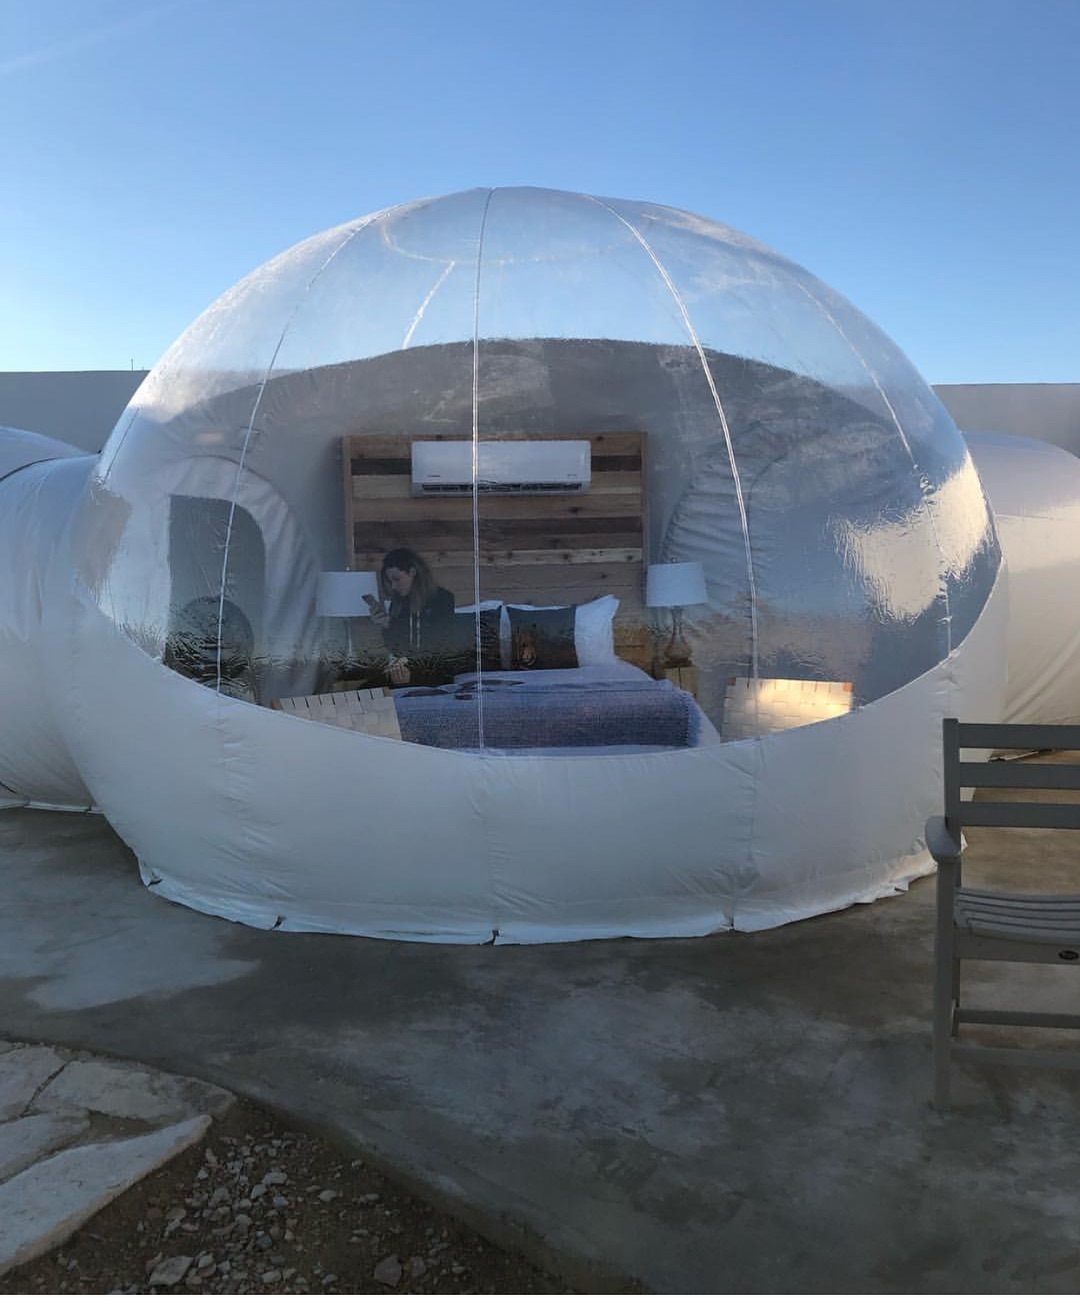 Bubbles - Basecamp, Bubble, Agave